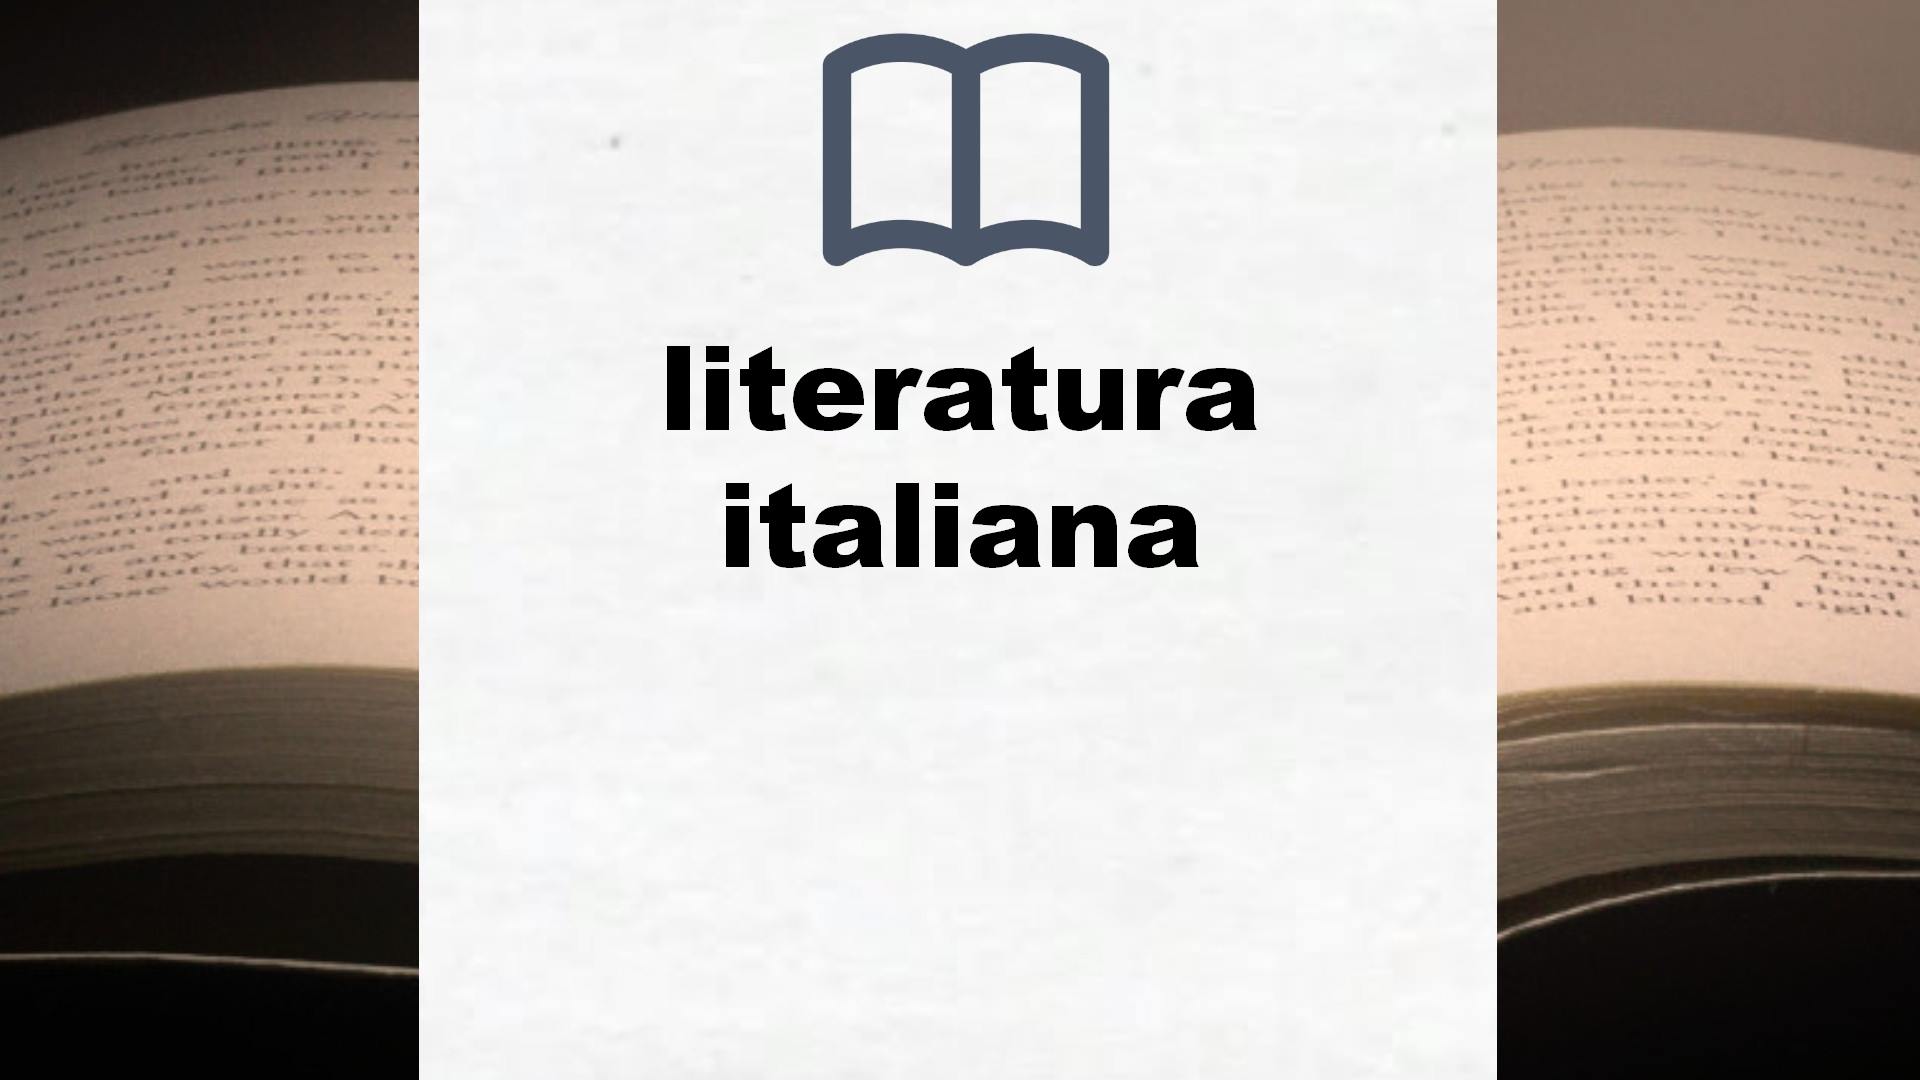 Libros sobre literatura italiana